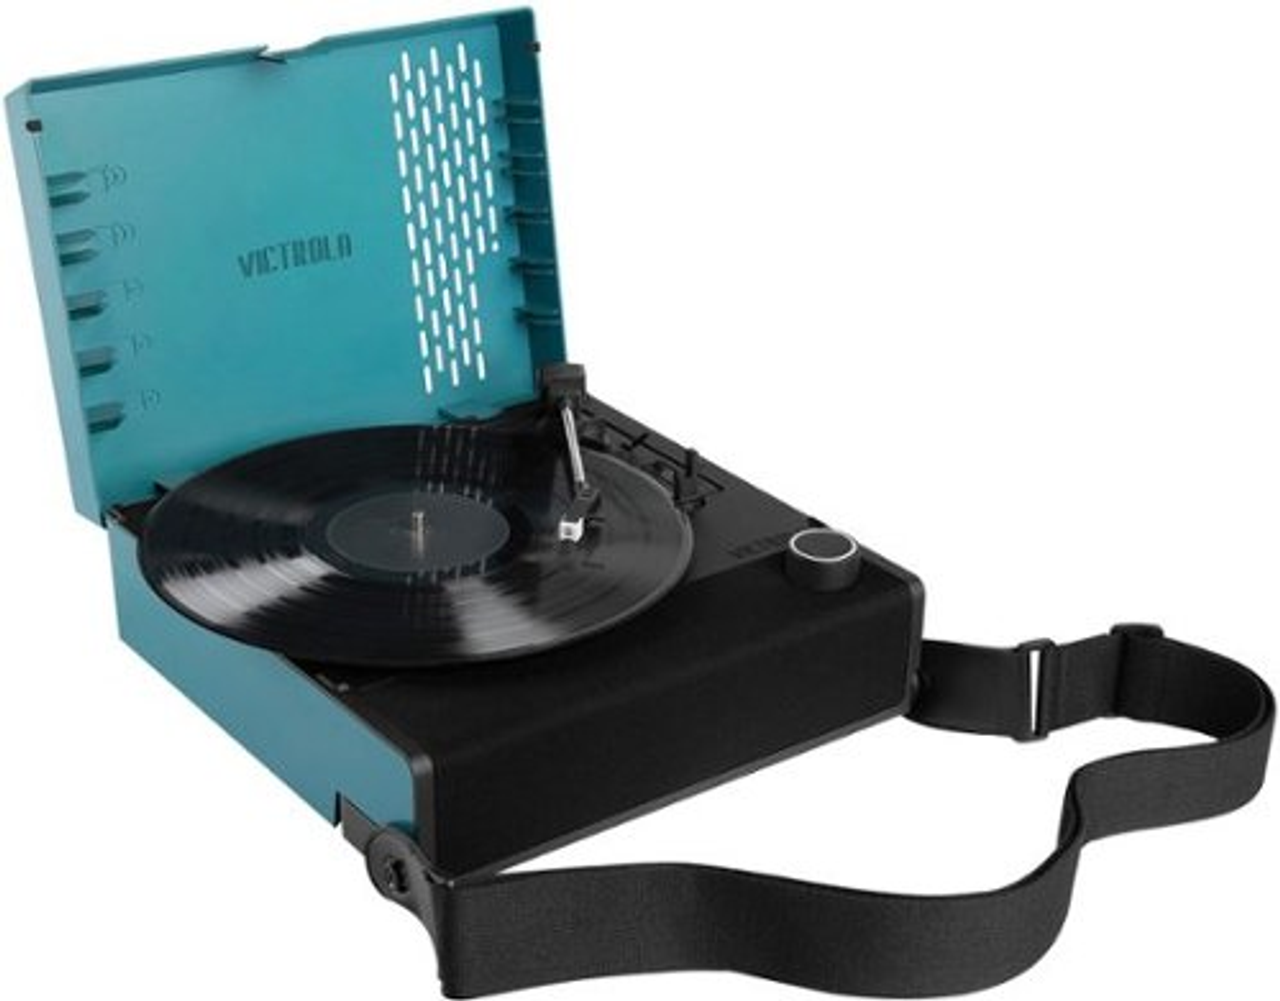 Victrola - Revolution GO Portable Record Player - Blue